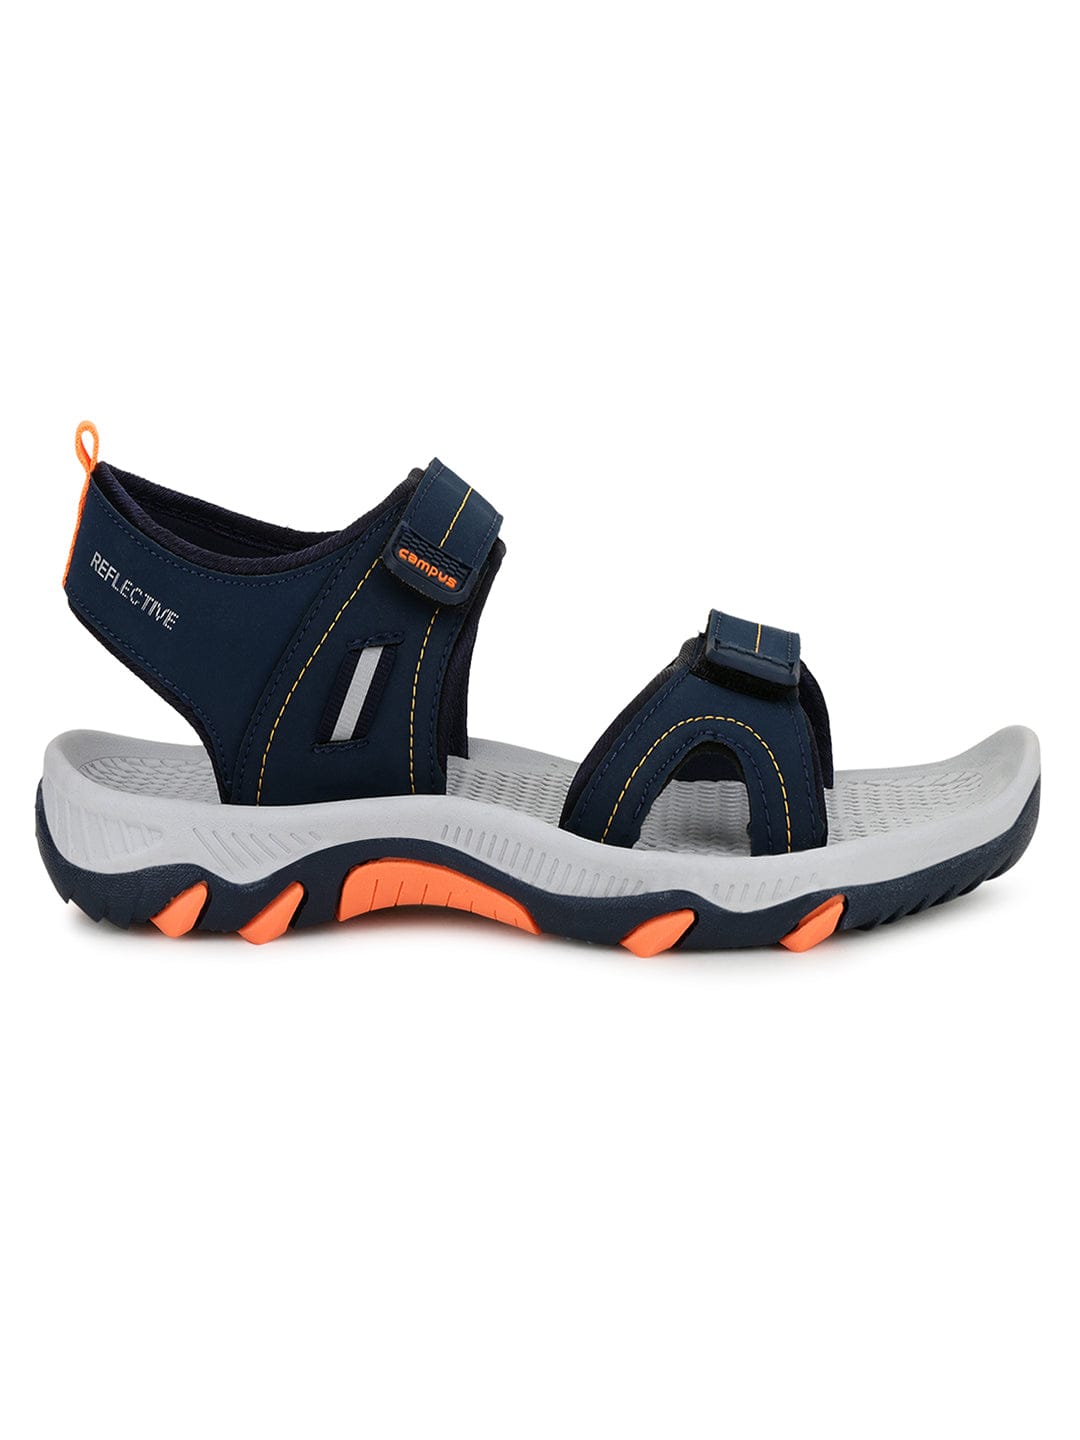 Buy Sandals For Men: Gc-11-Gc-11Blk-Navy-Mstd1049 | Campus Shoes